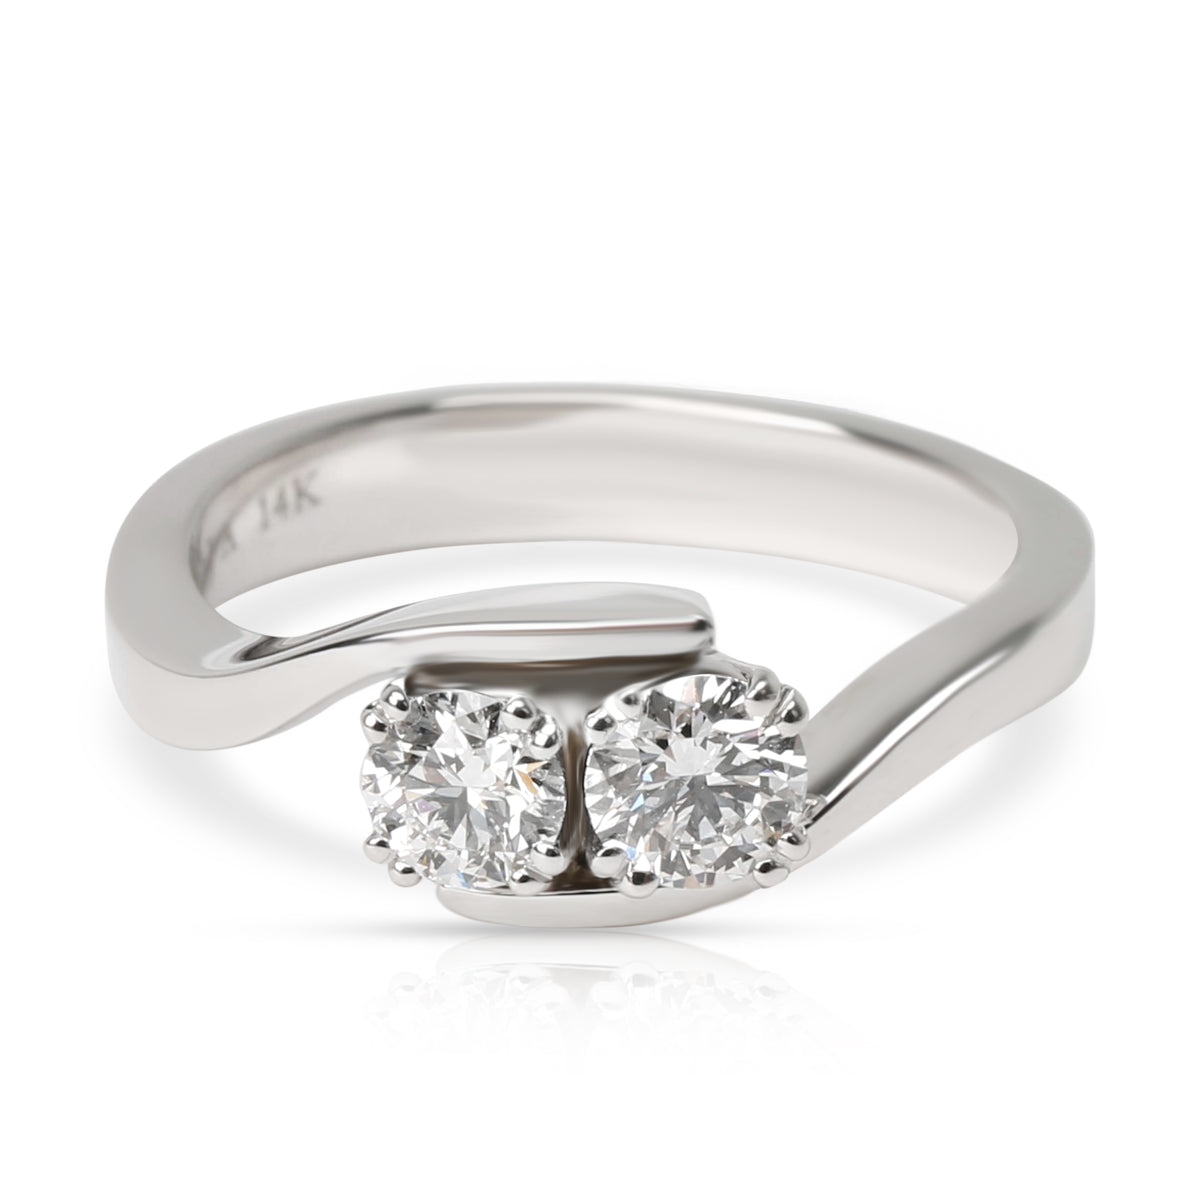 James Allen GIA Two Stone Diamond Engagement Ring in E VVS2 0.54 CTW